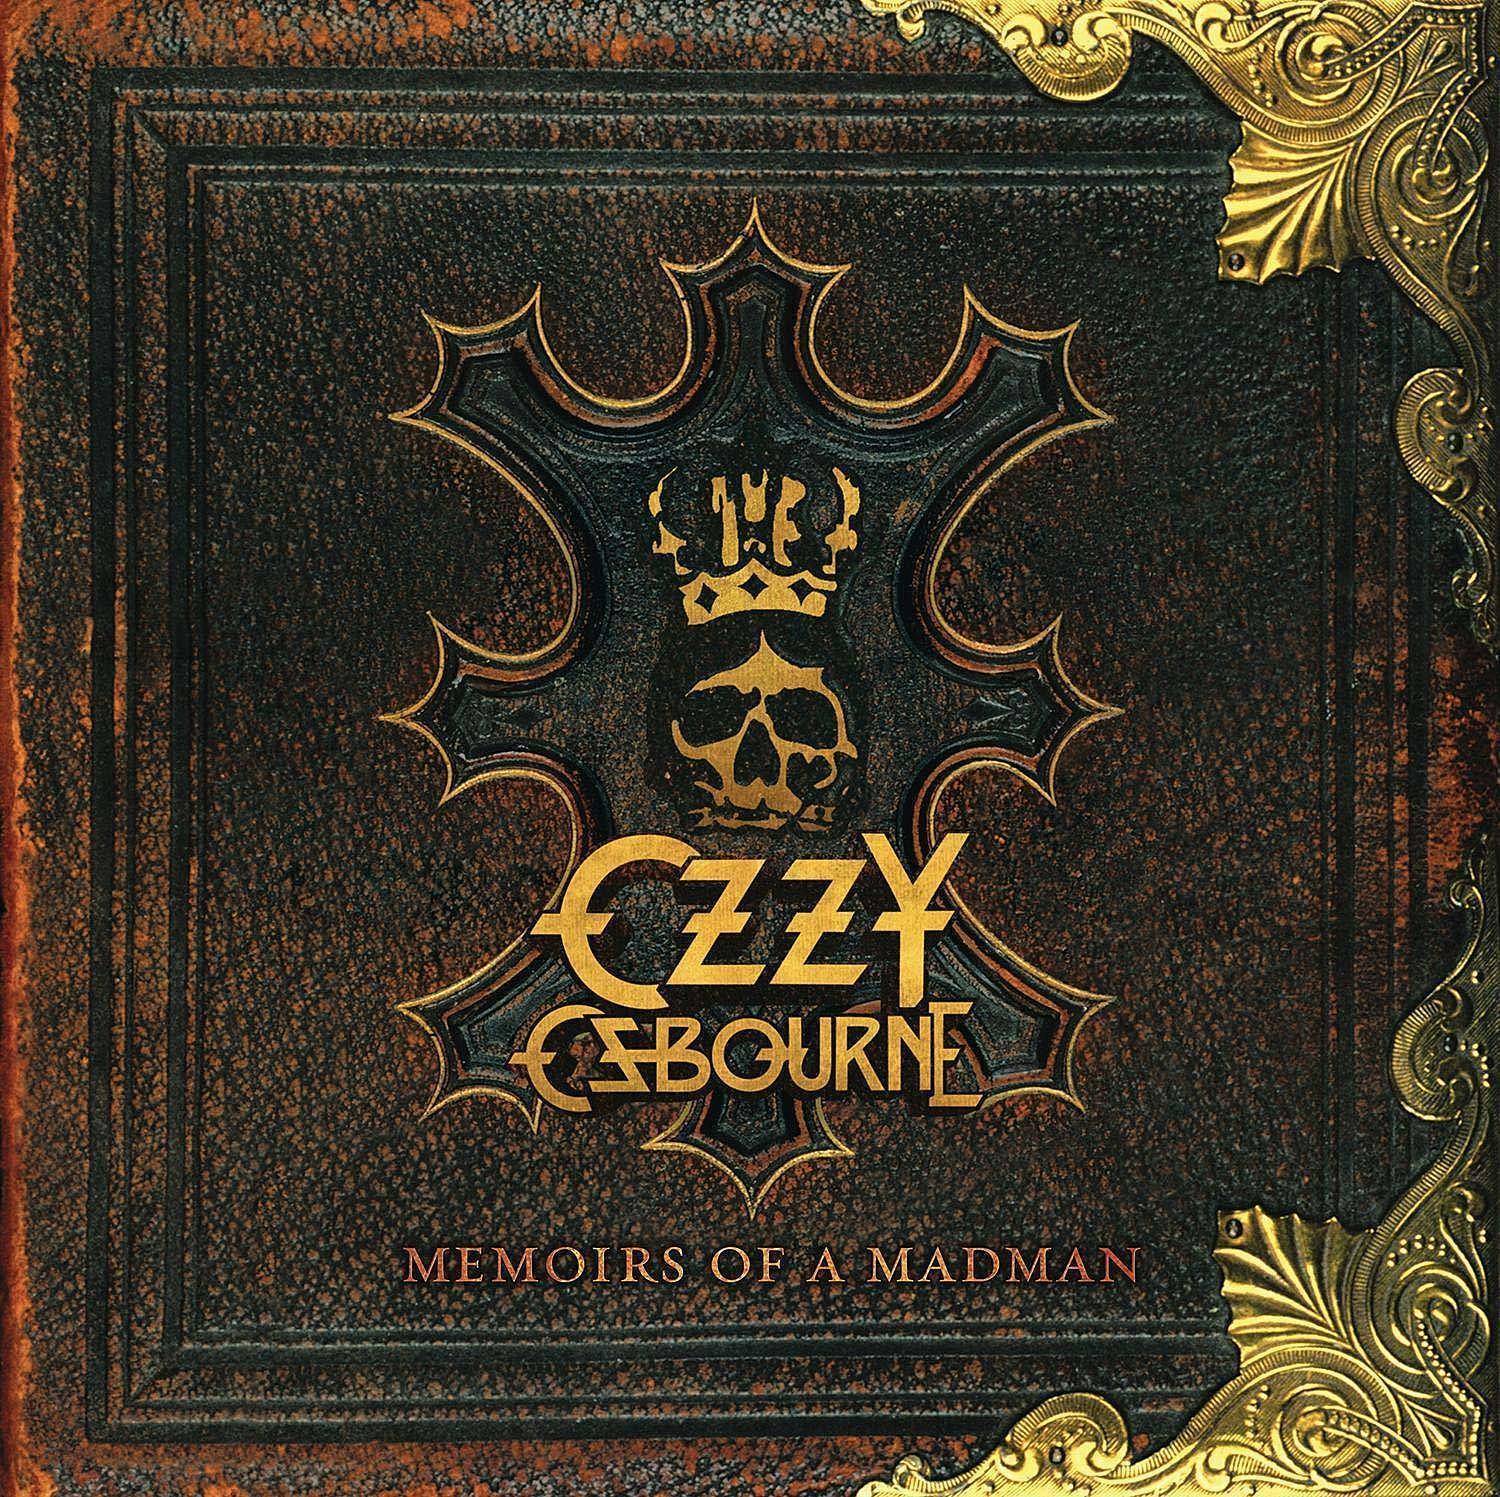 CD Ozzy Osbourne - Memoirs of a madman